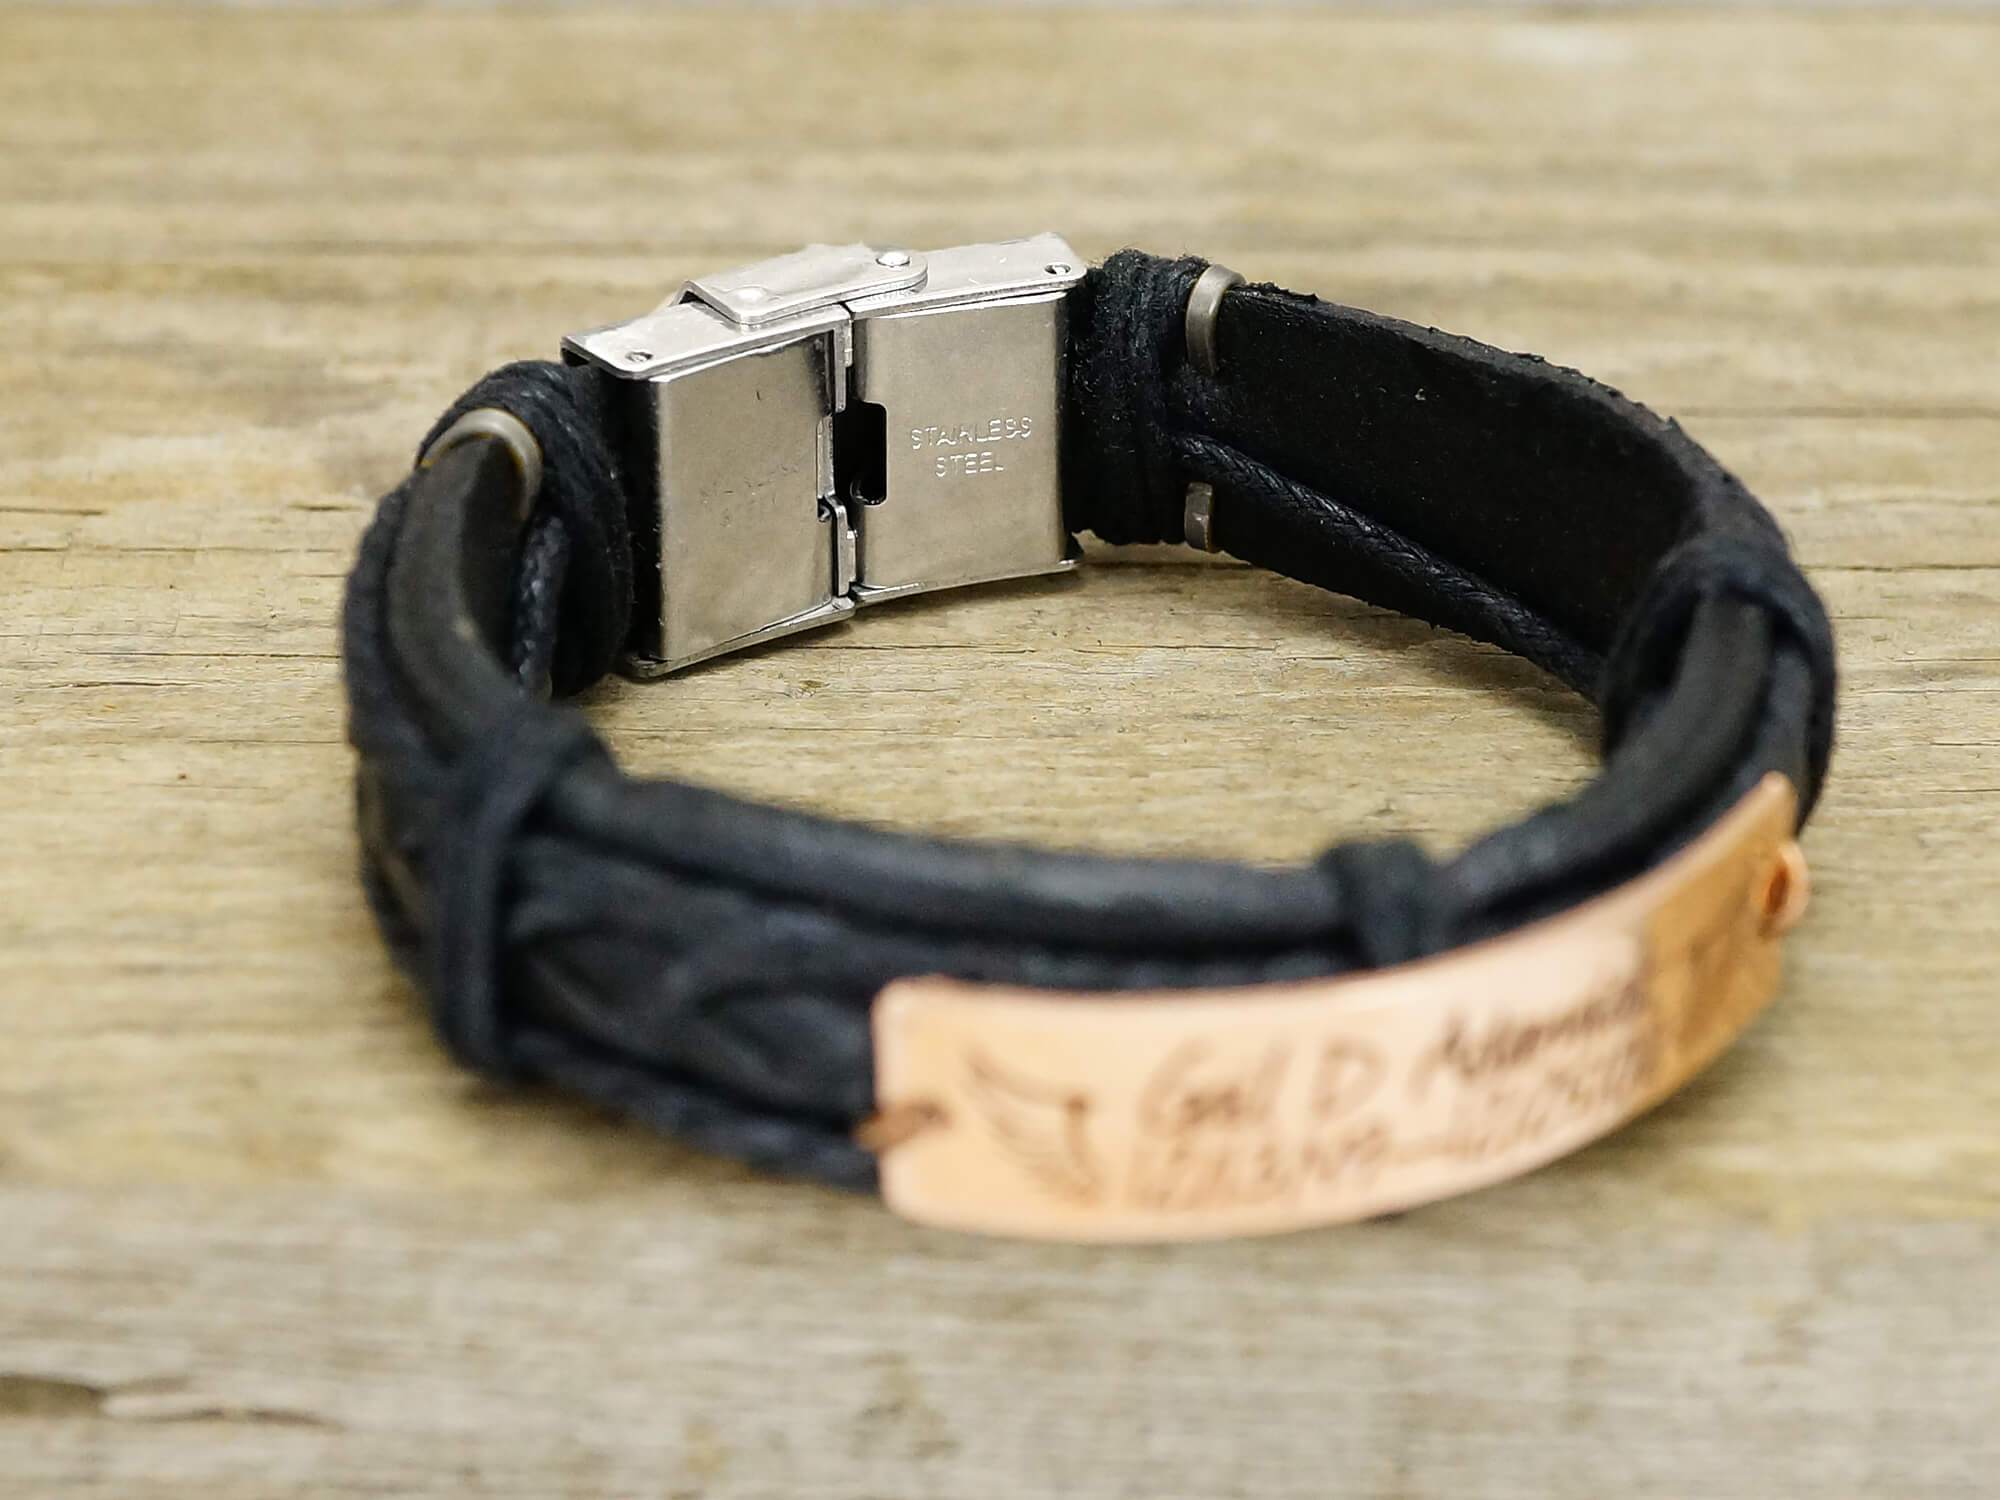 Custom Leather Monogram Bracelet, 3 Initial Monogrammed Gift, Mens Engraved Leather Braided Bracelet 8.5 inches-large +$2 / Yes